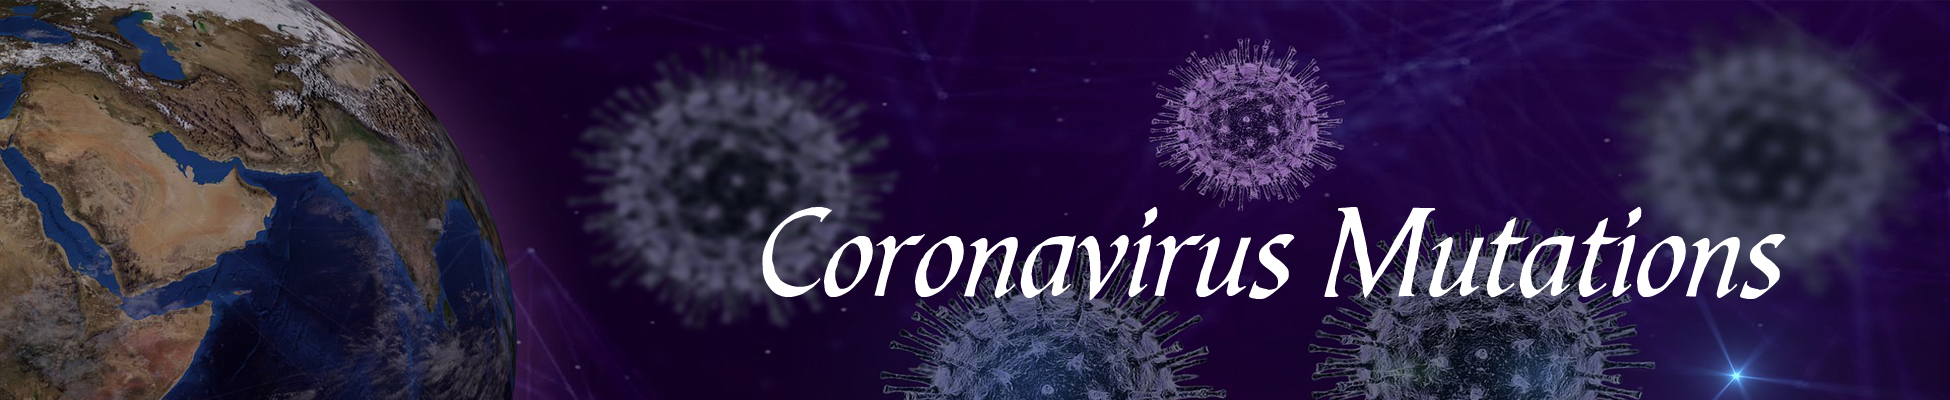 The World in space with coronavirus